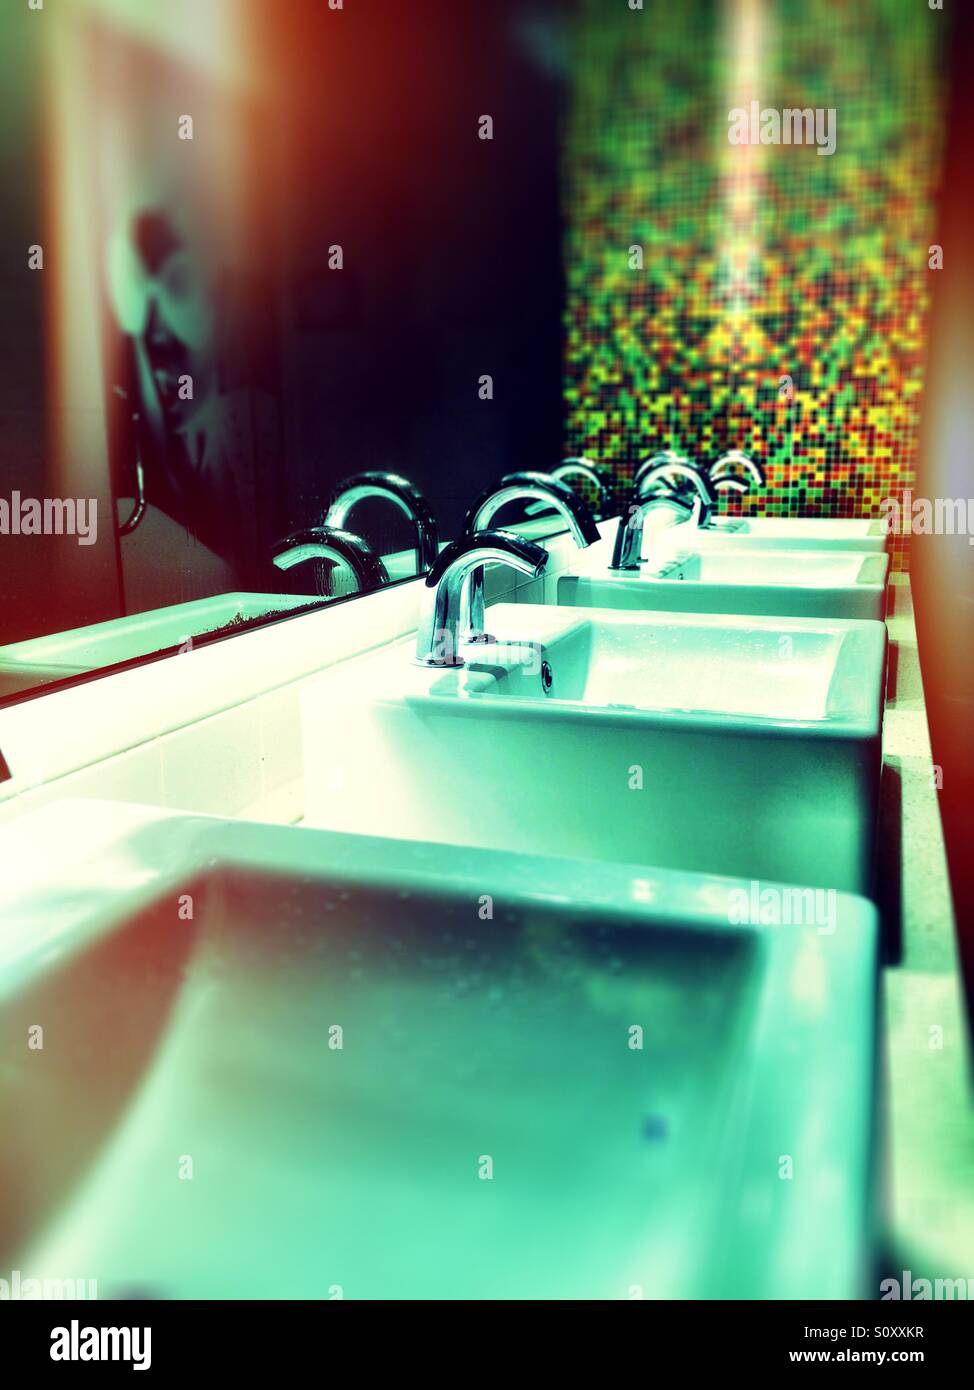 Public washroom sinks Stock Photo